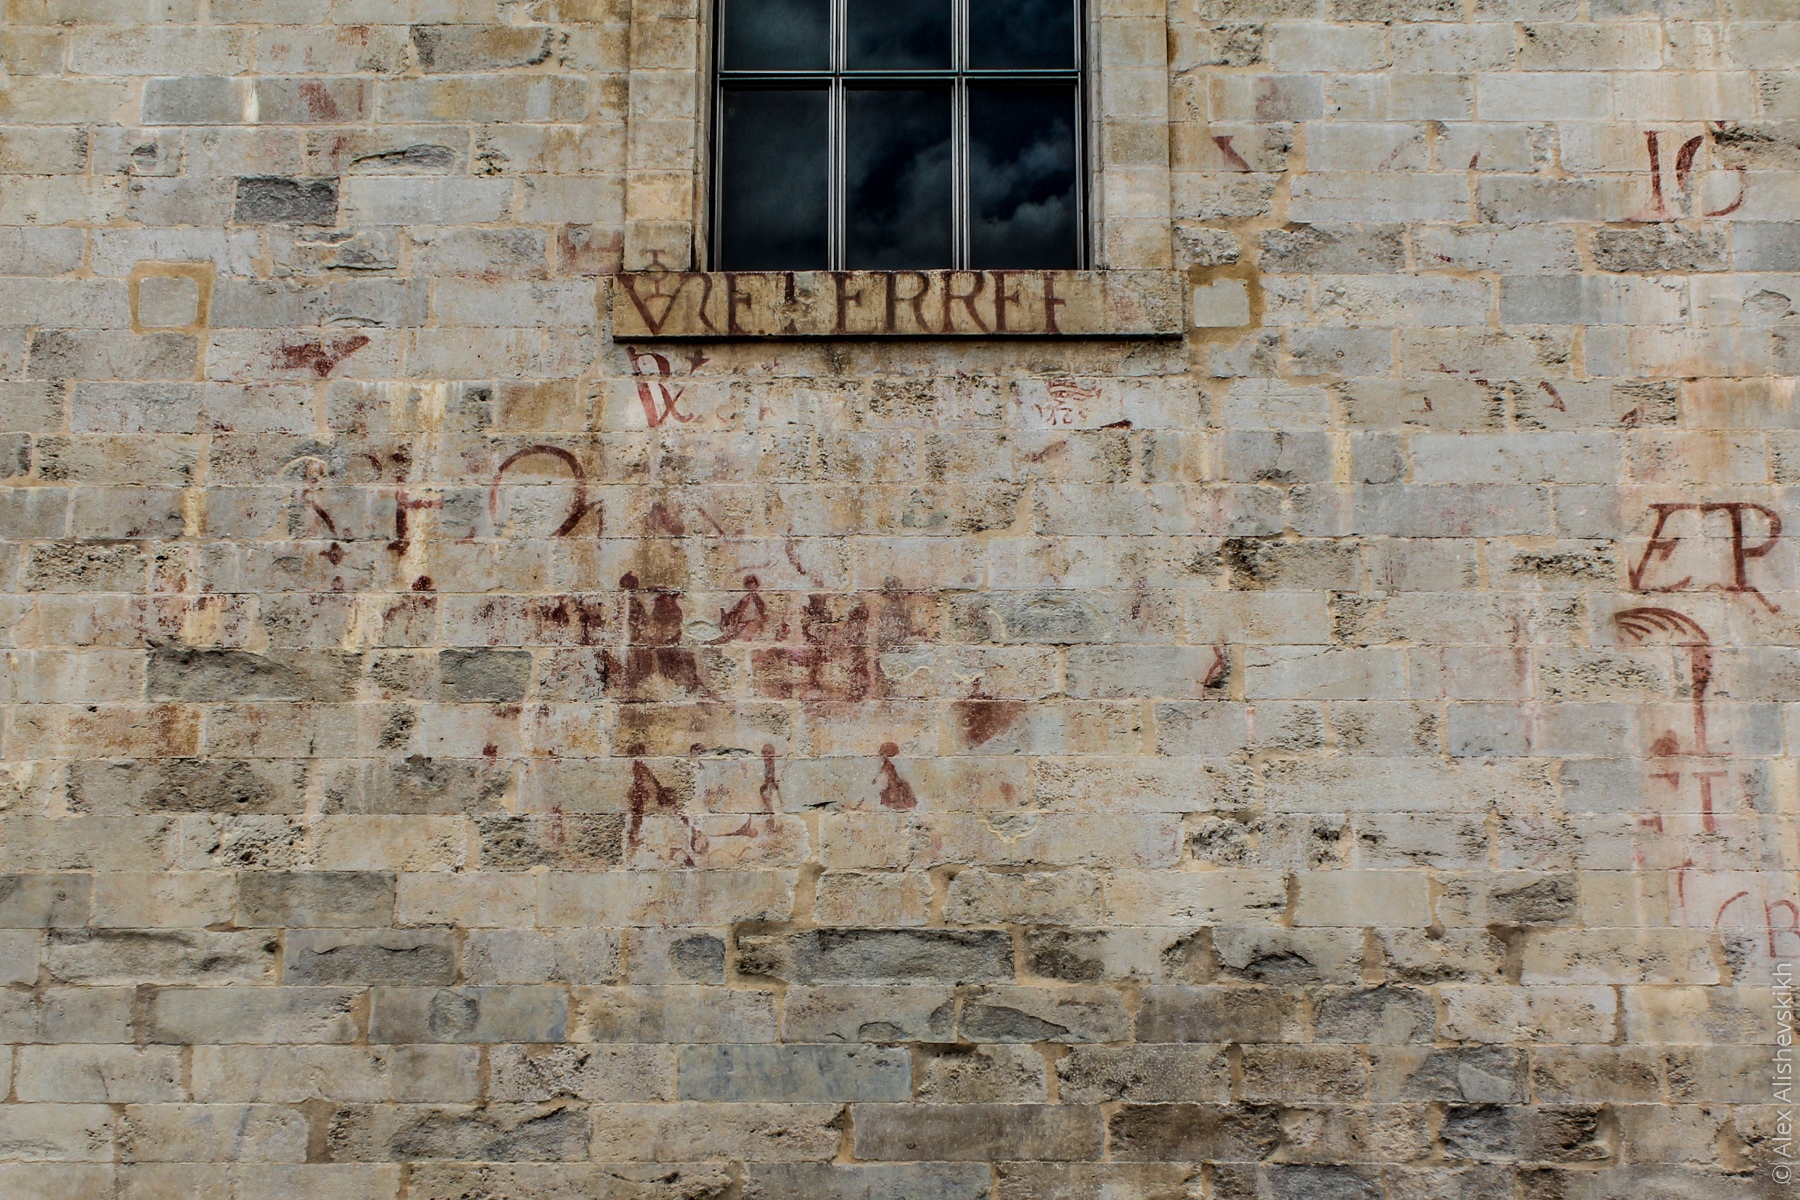 Old Girona